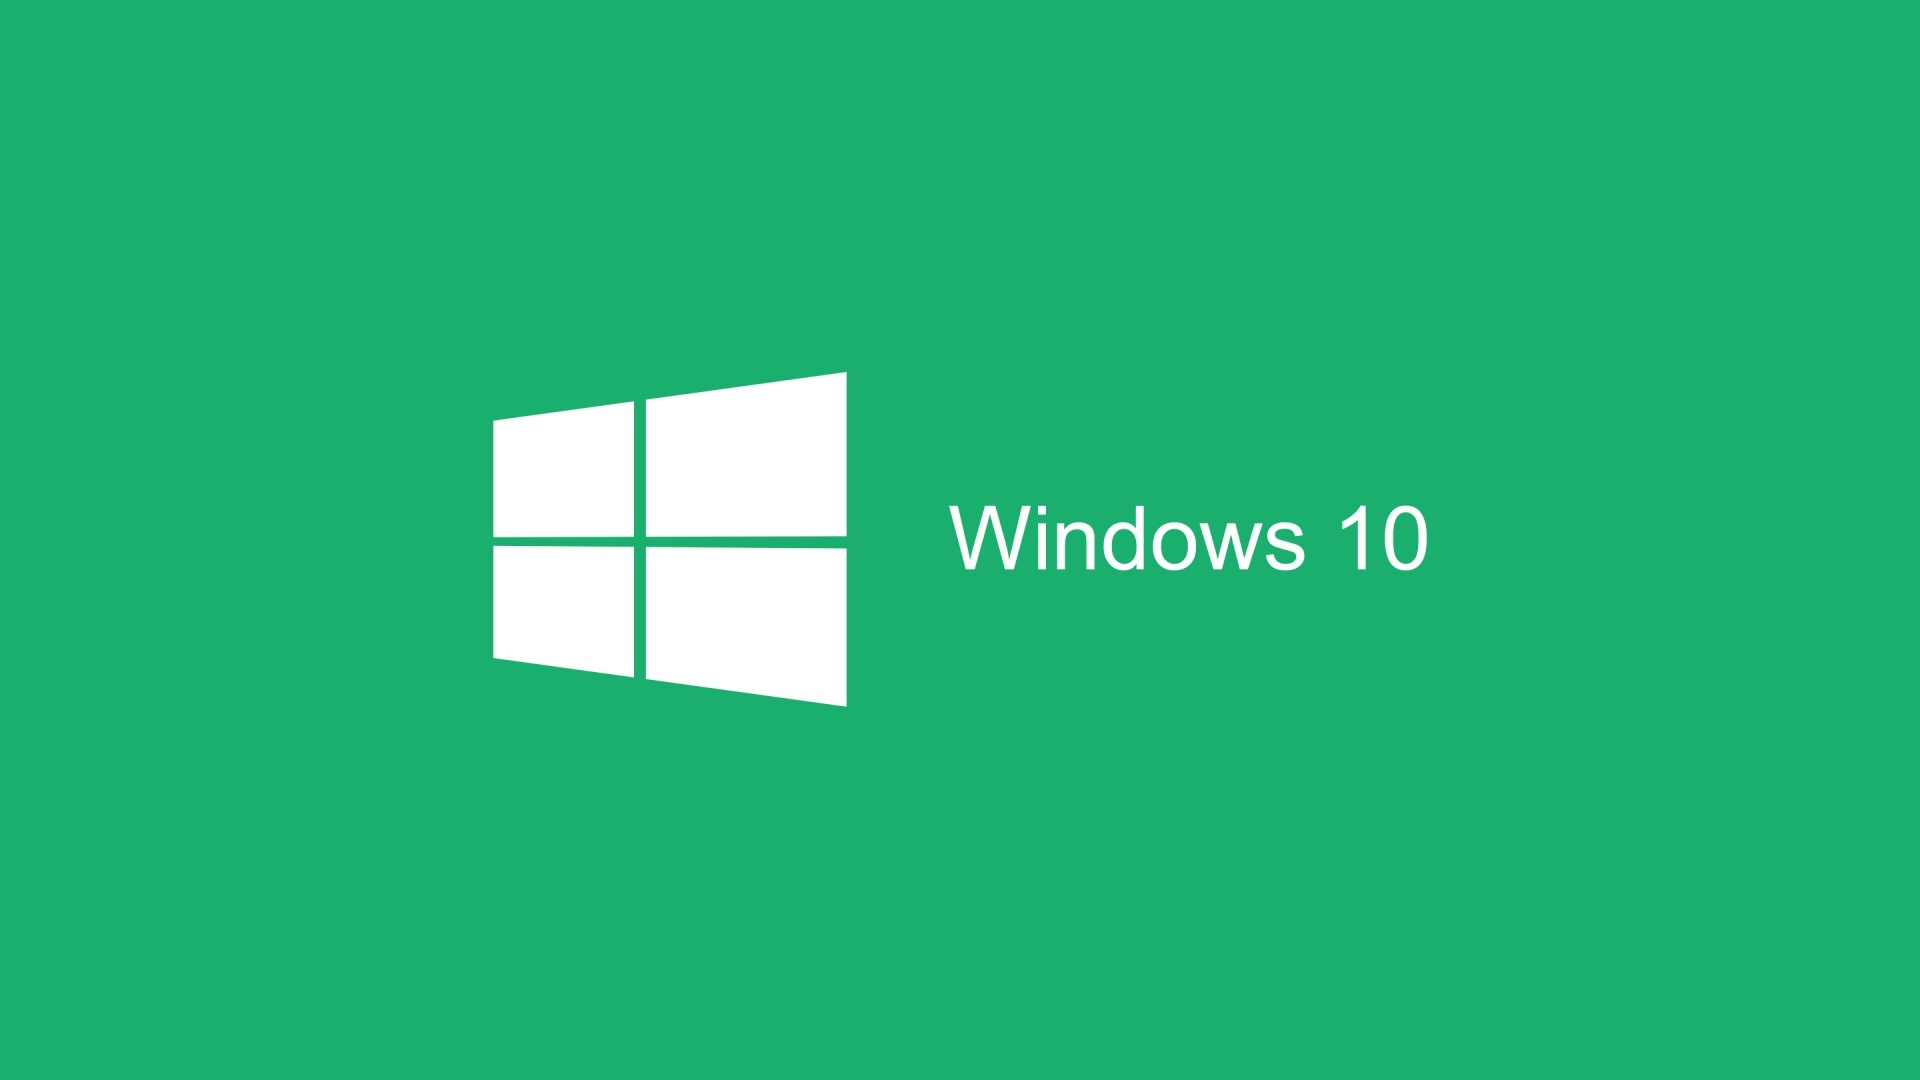 windows_10_2015_green_background-wallpaper-1920x1080.jpg